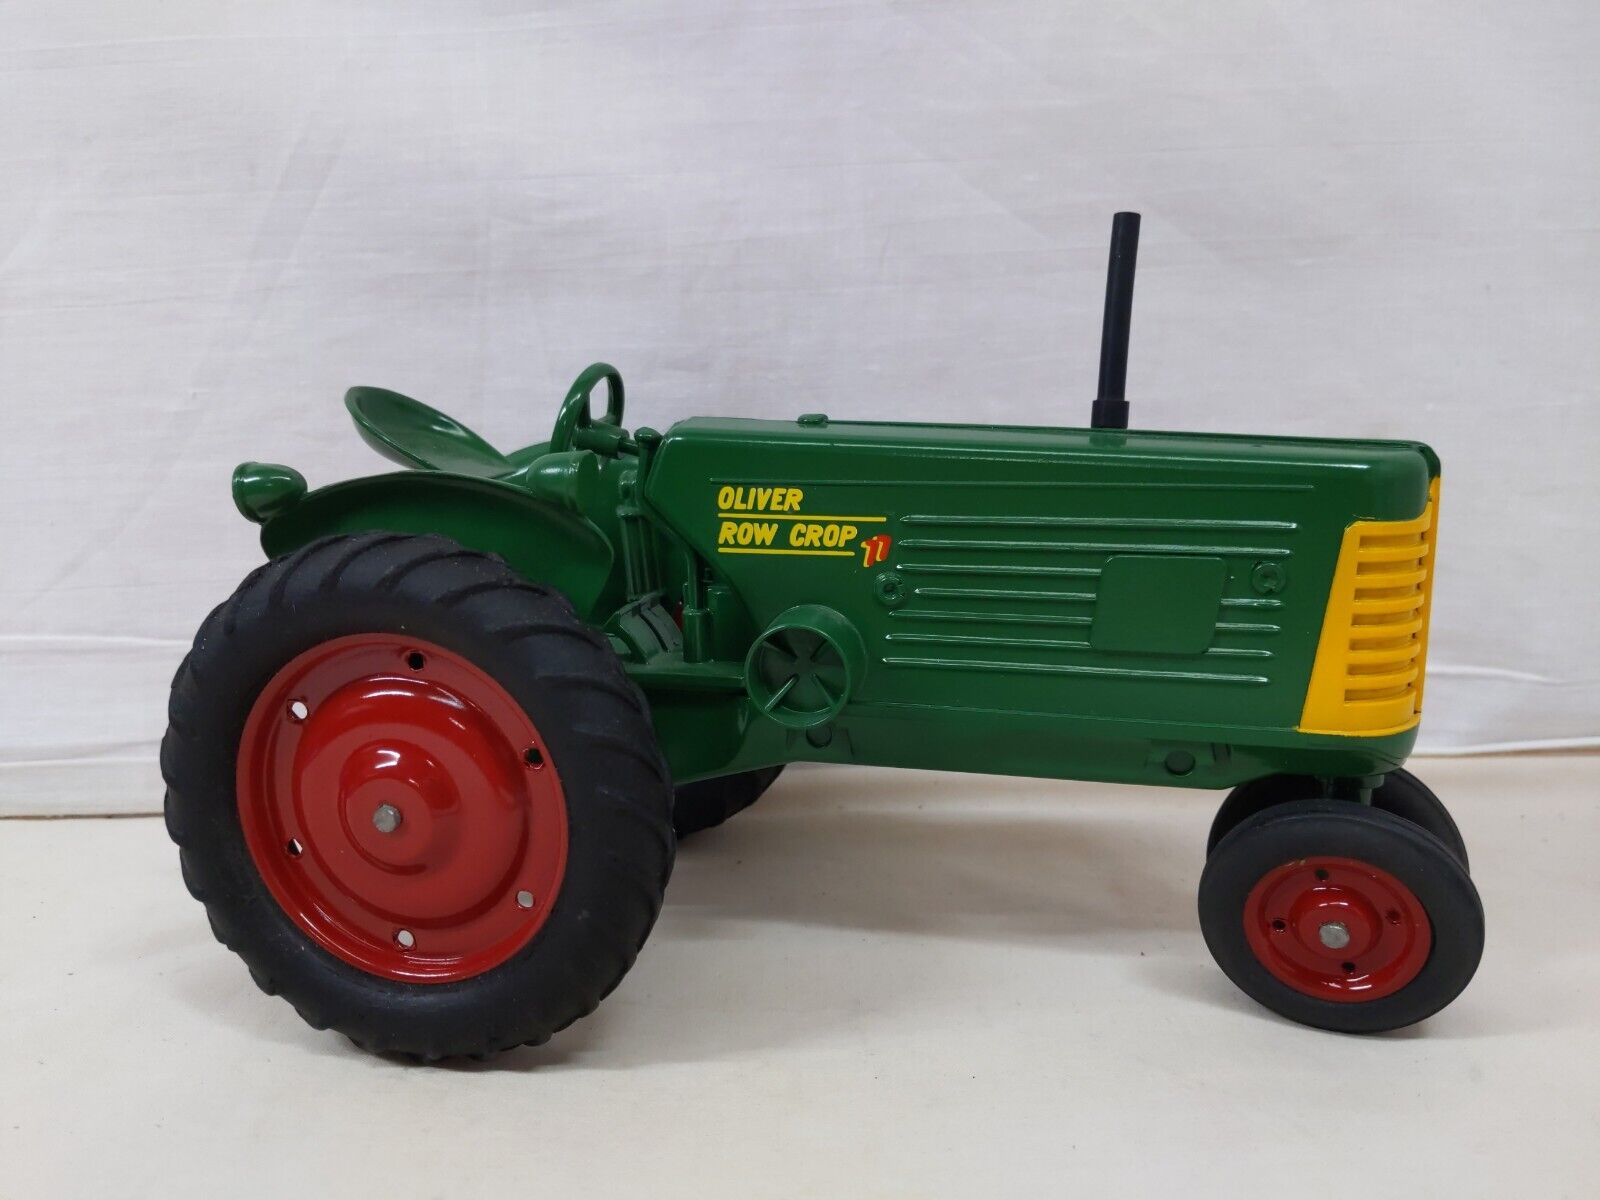 1/16 Slik Farm Toy Oliver Super 77 Tractor Repaint | eBay